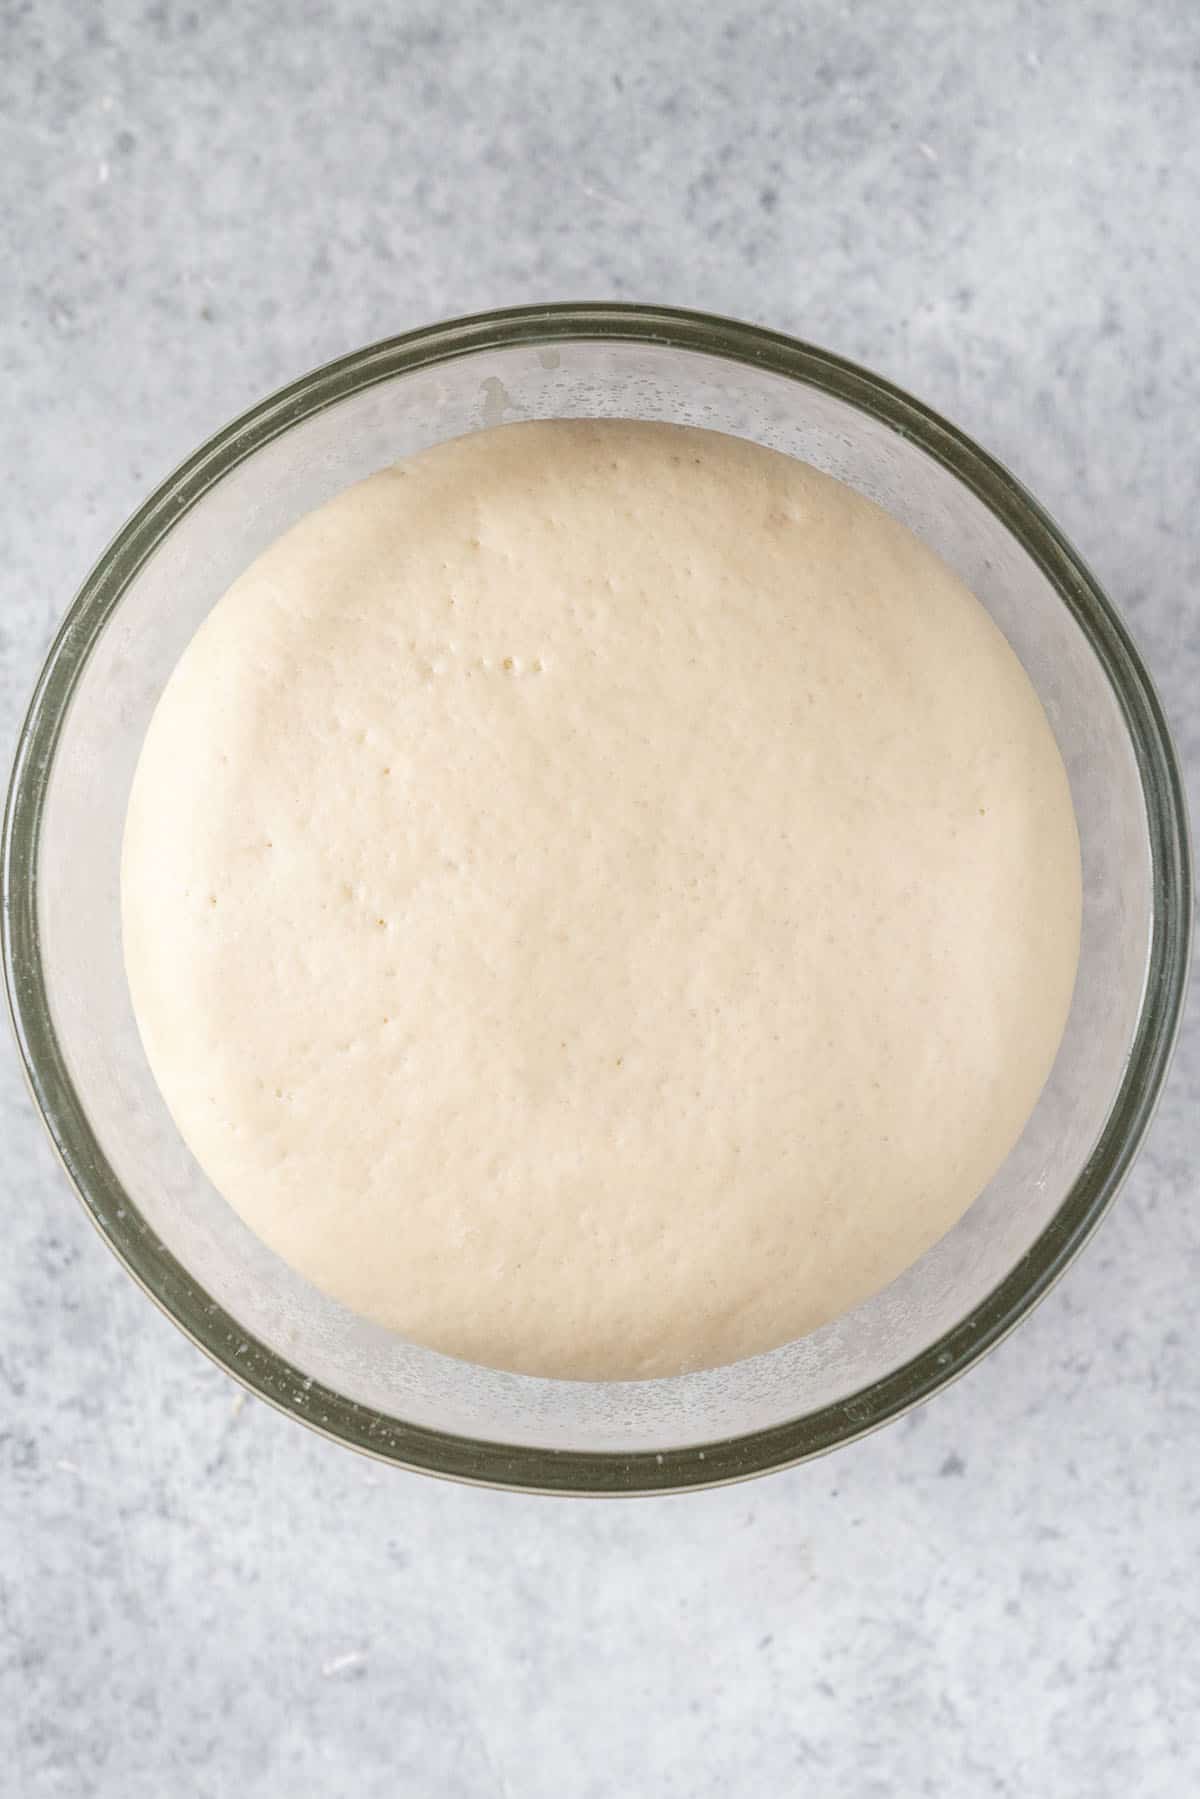 risen pita bread dough in glass bowl